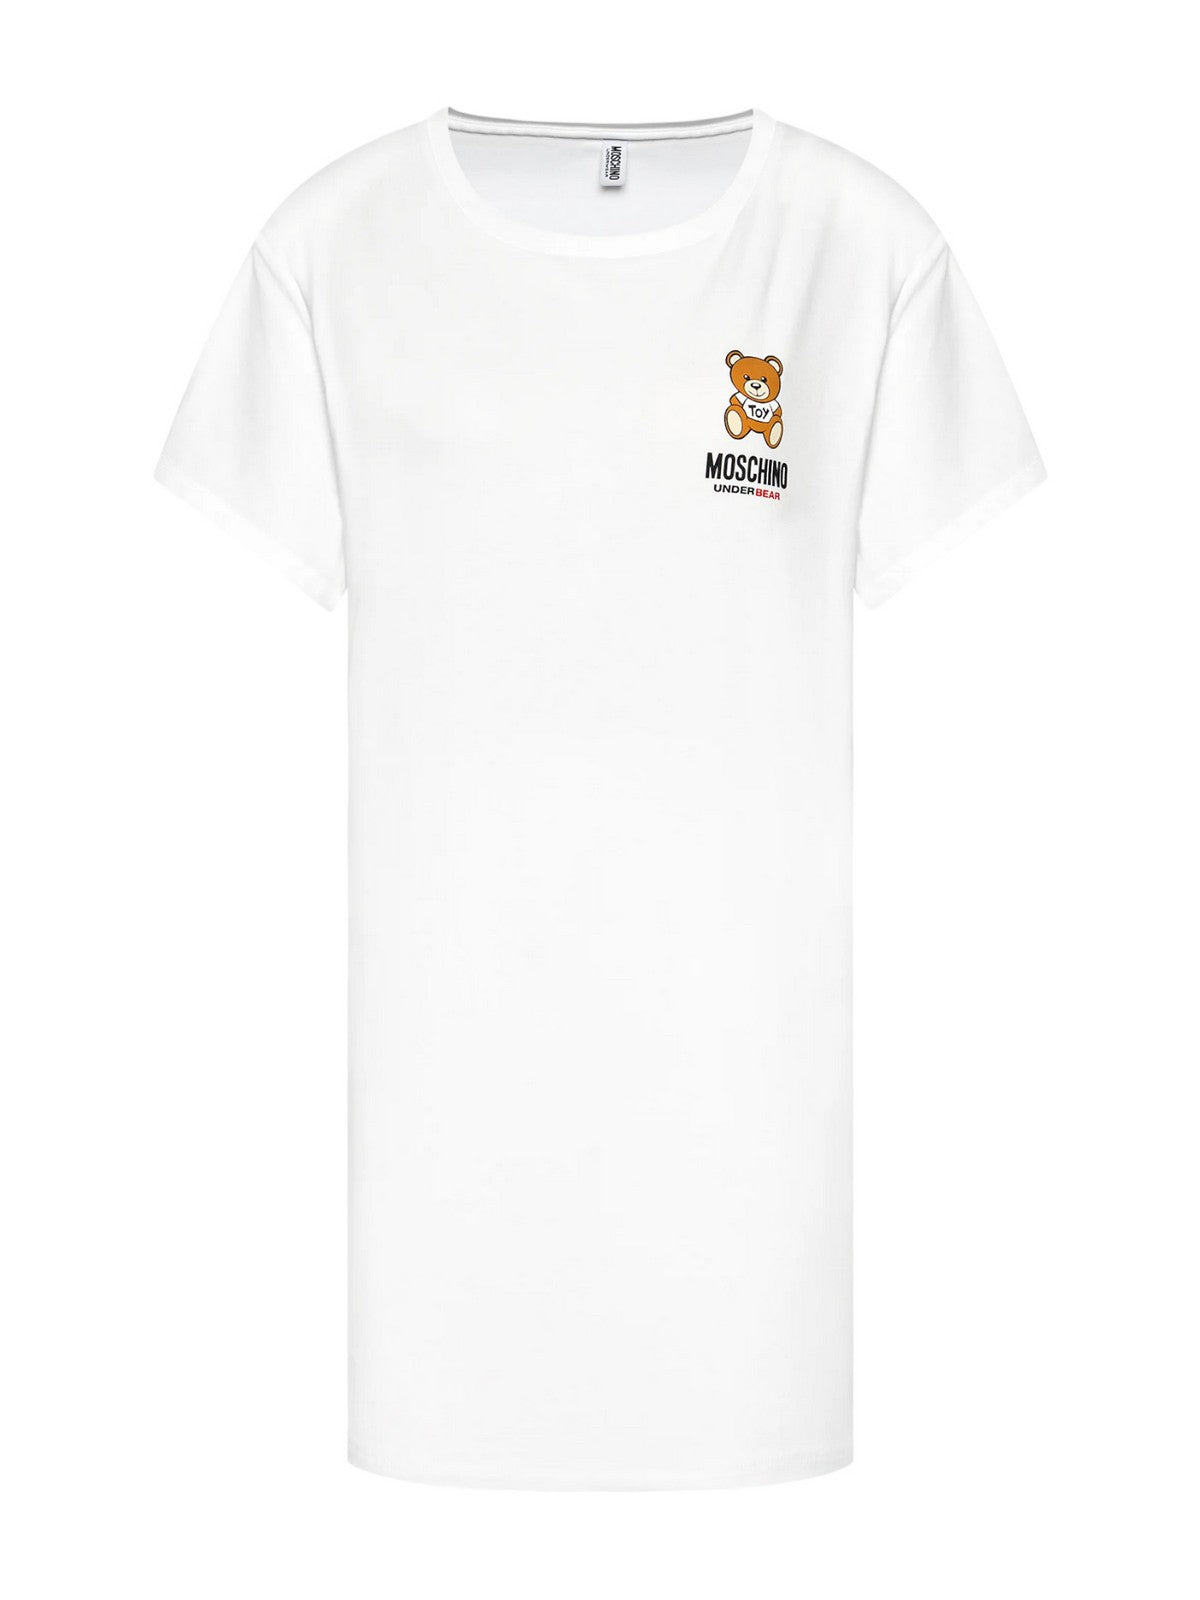 MOSCHINO UNDERWEAR T-Shirt et Polo Femme V6A0785 4410 0001 Blanc